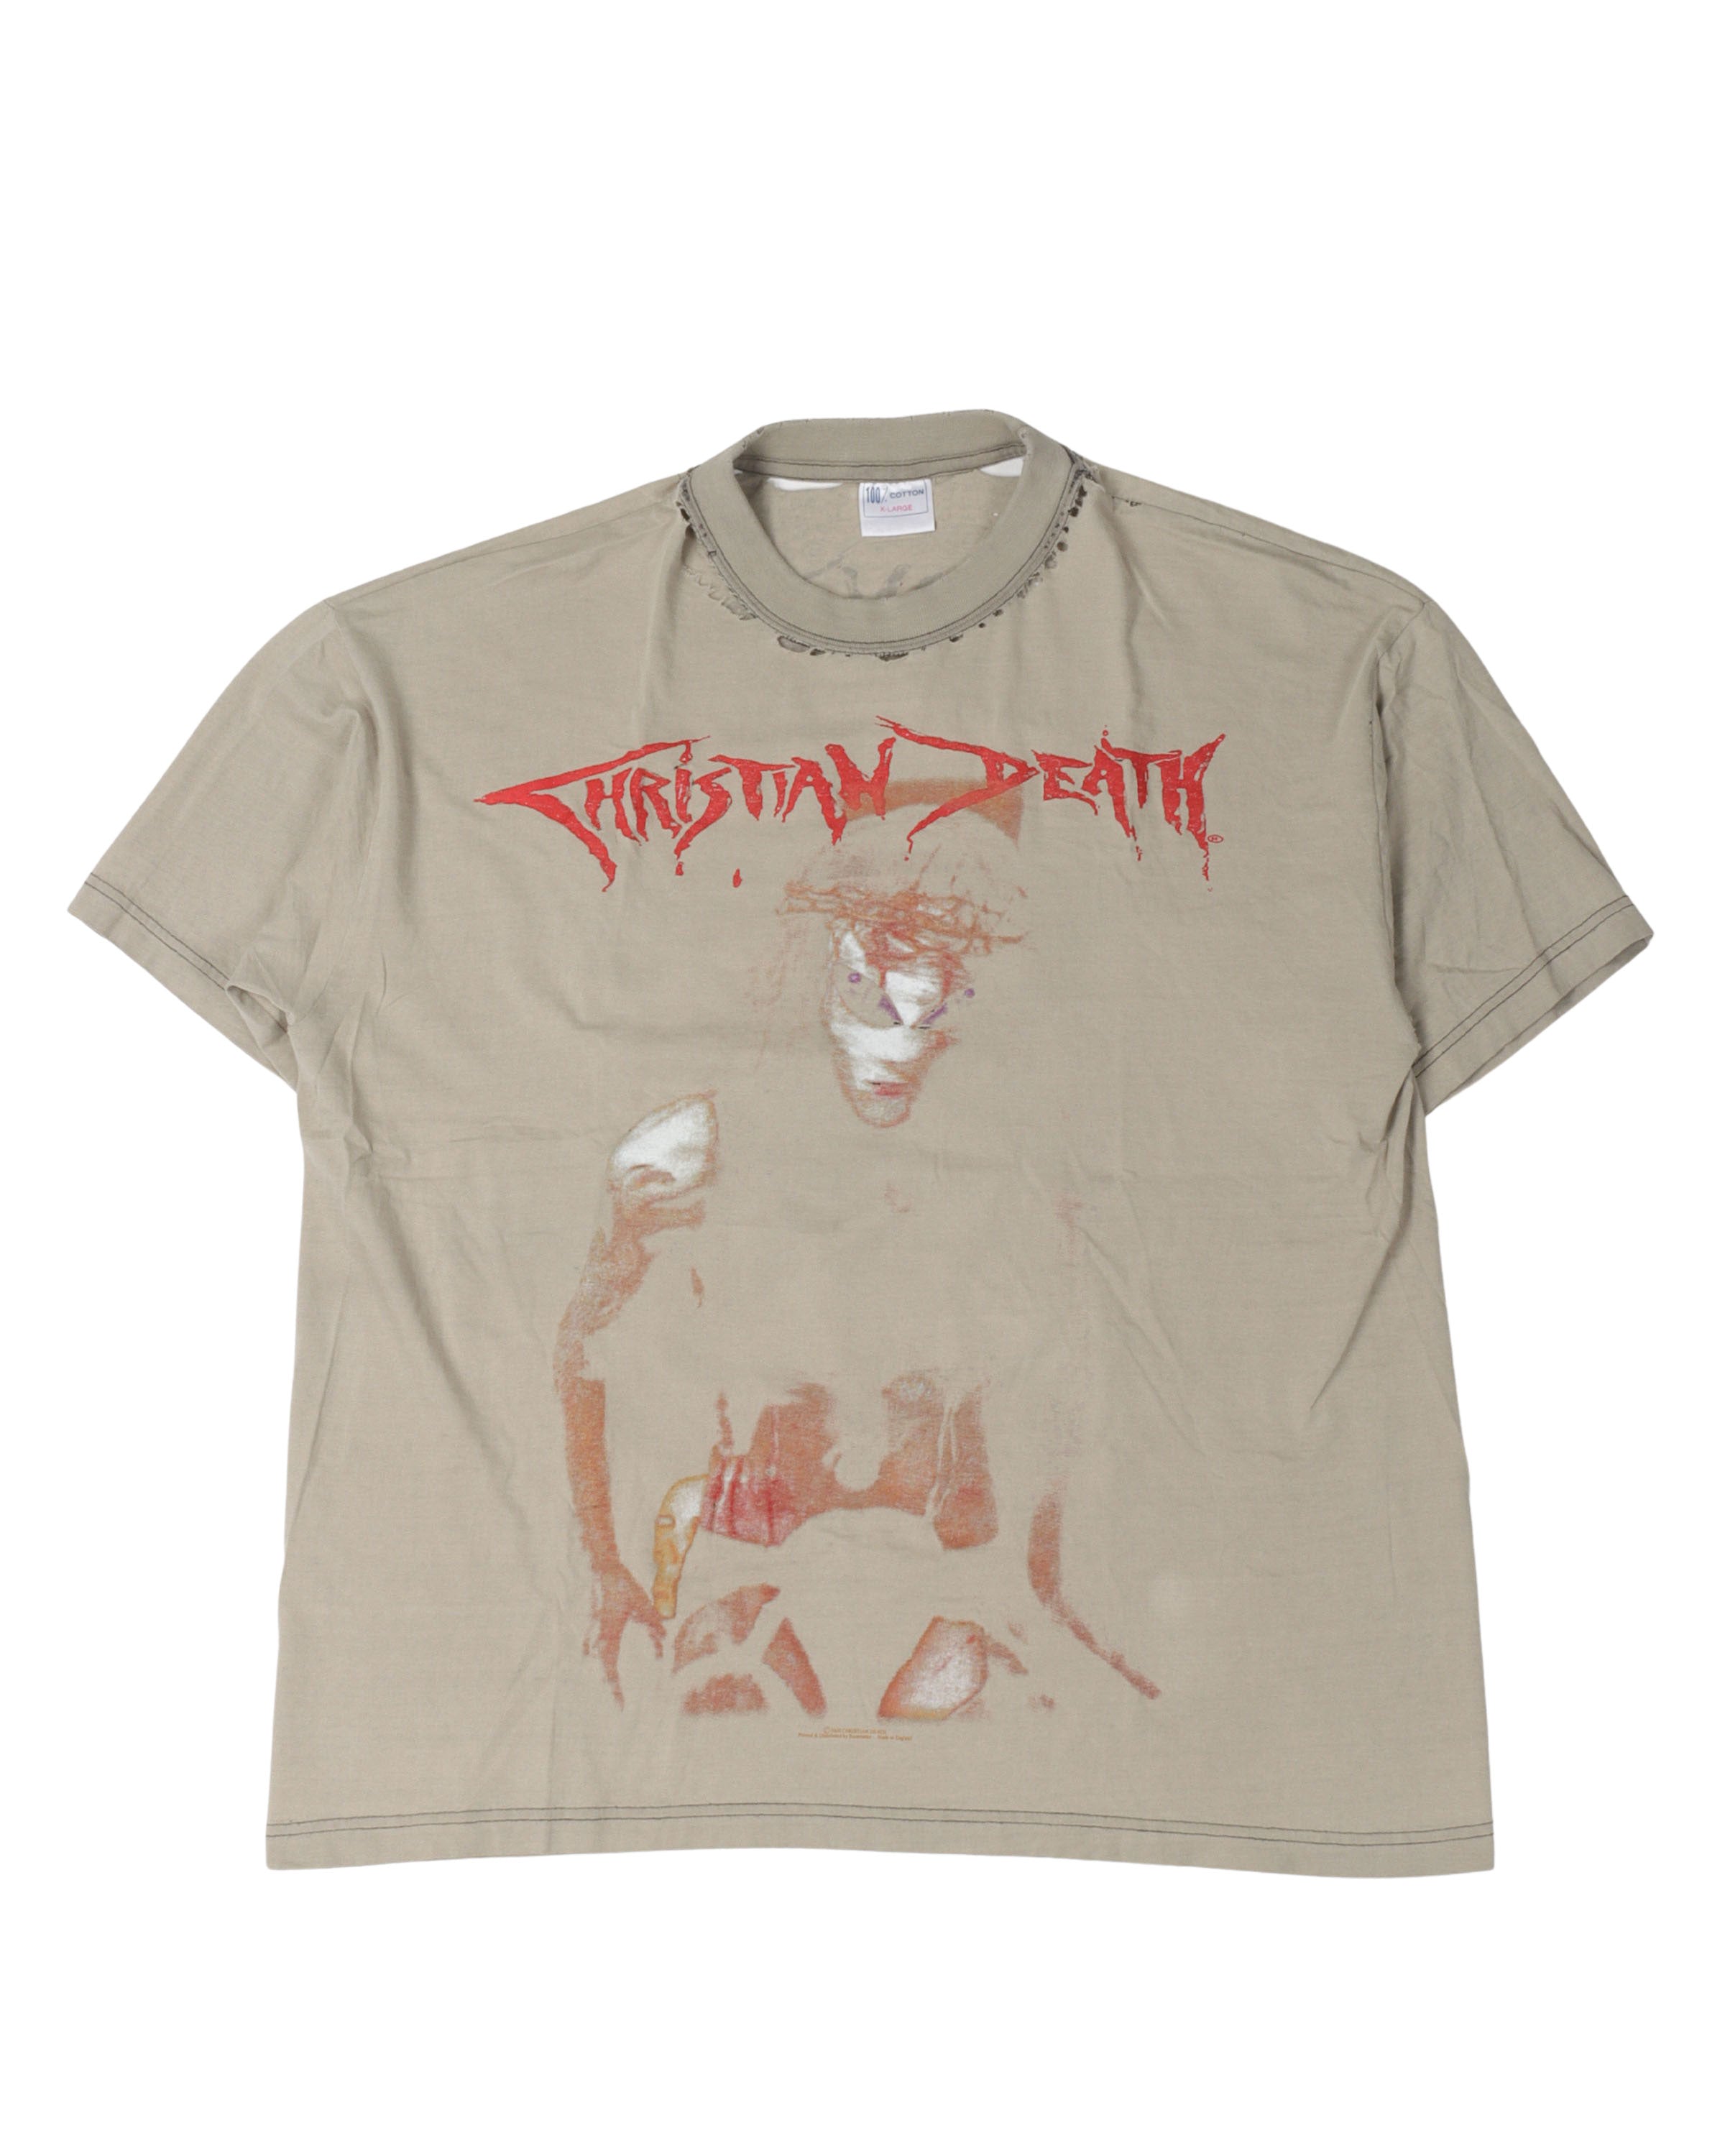 Thrashed Christian Death T-Shirt